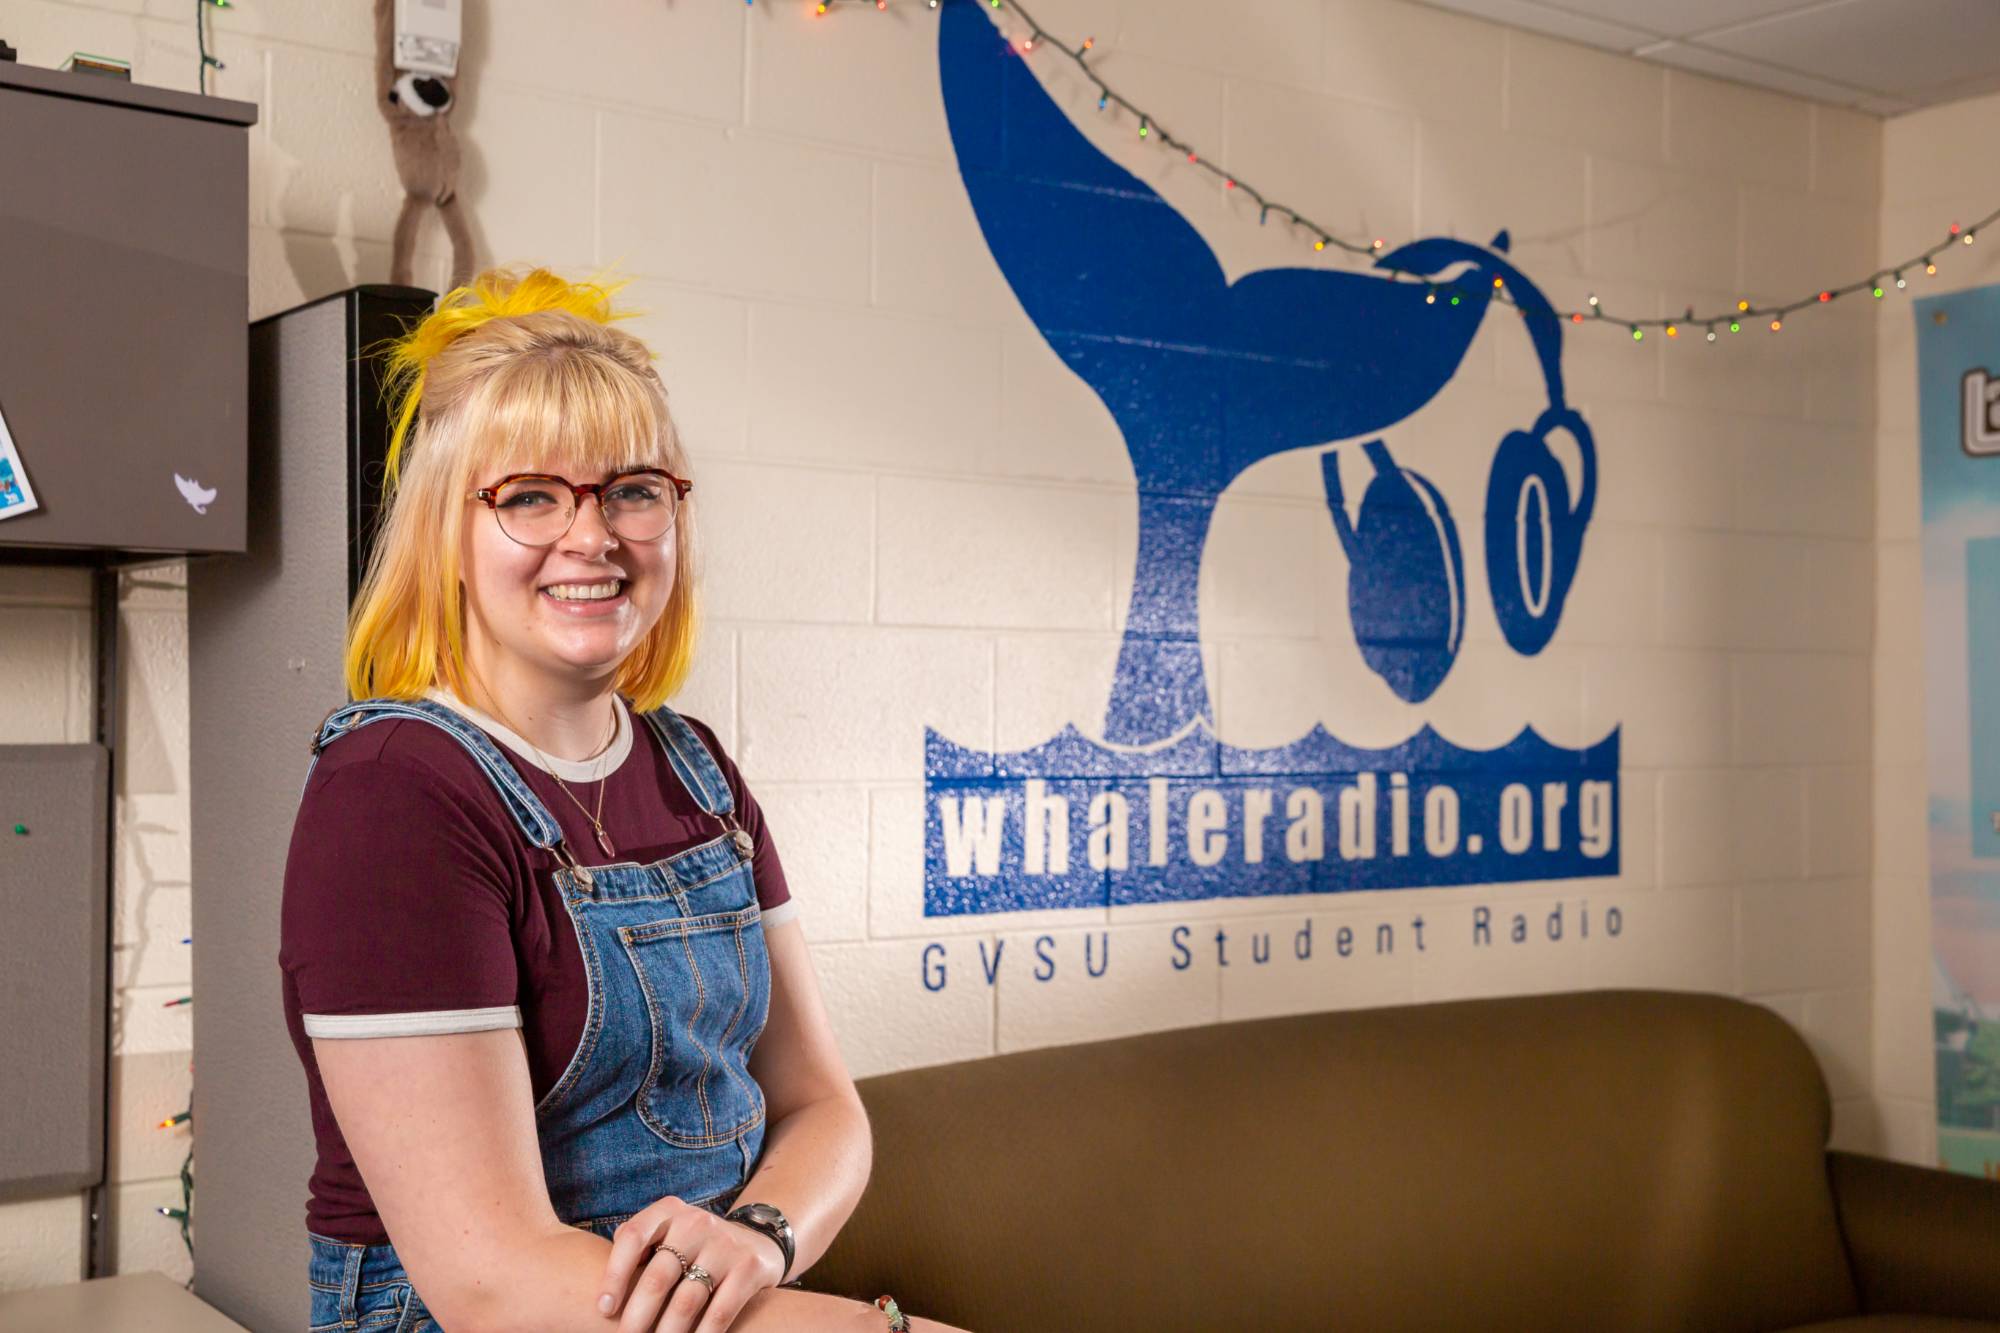 Rachel Syrba by the Whale Radio wall.